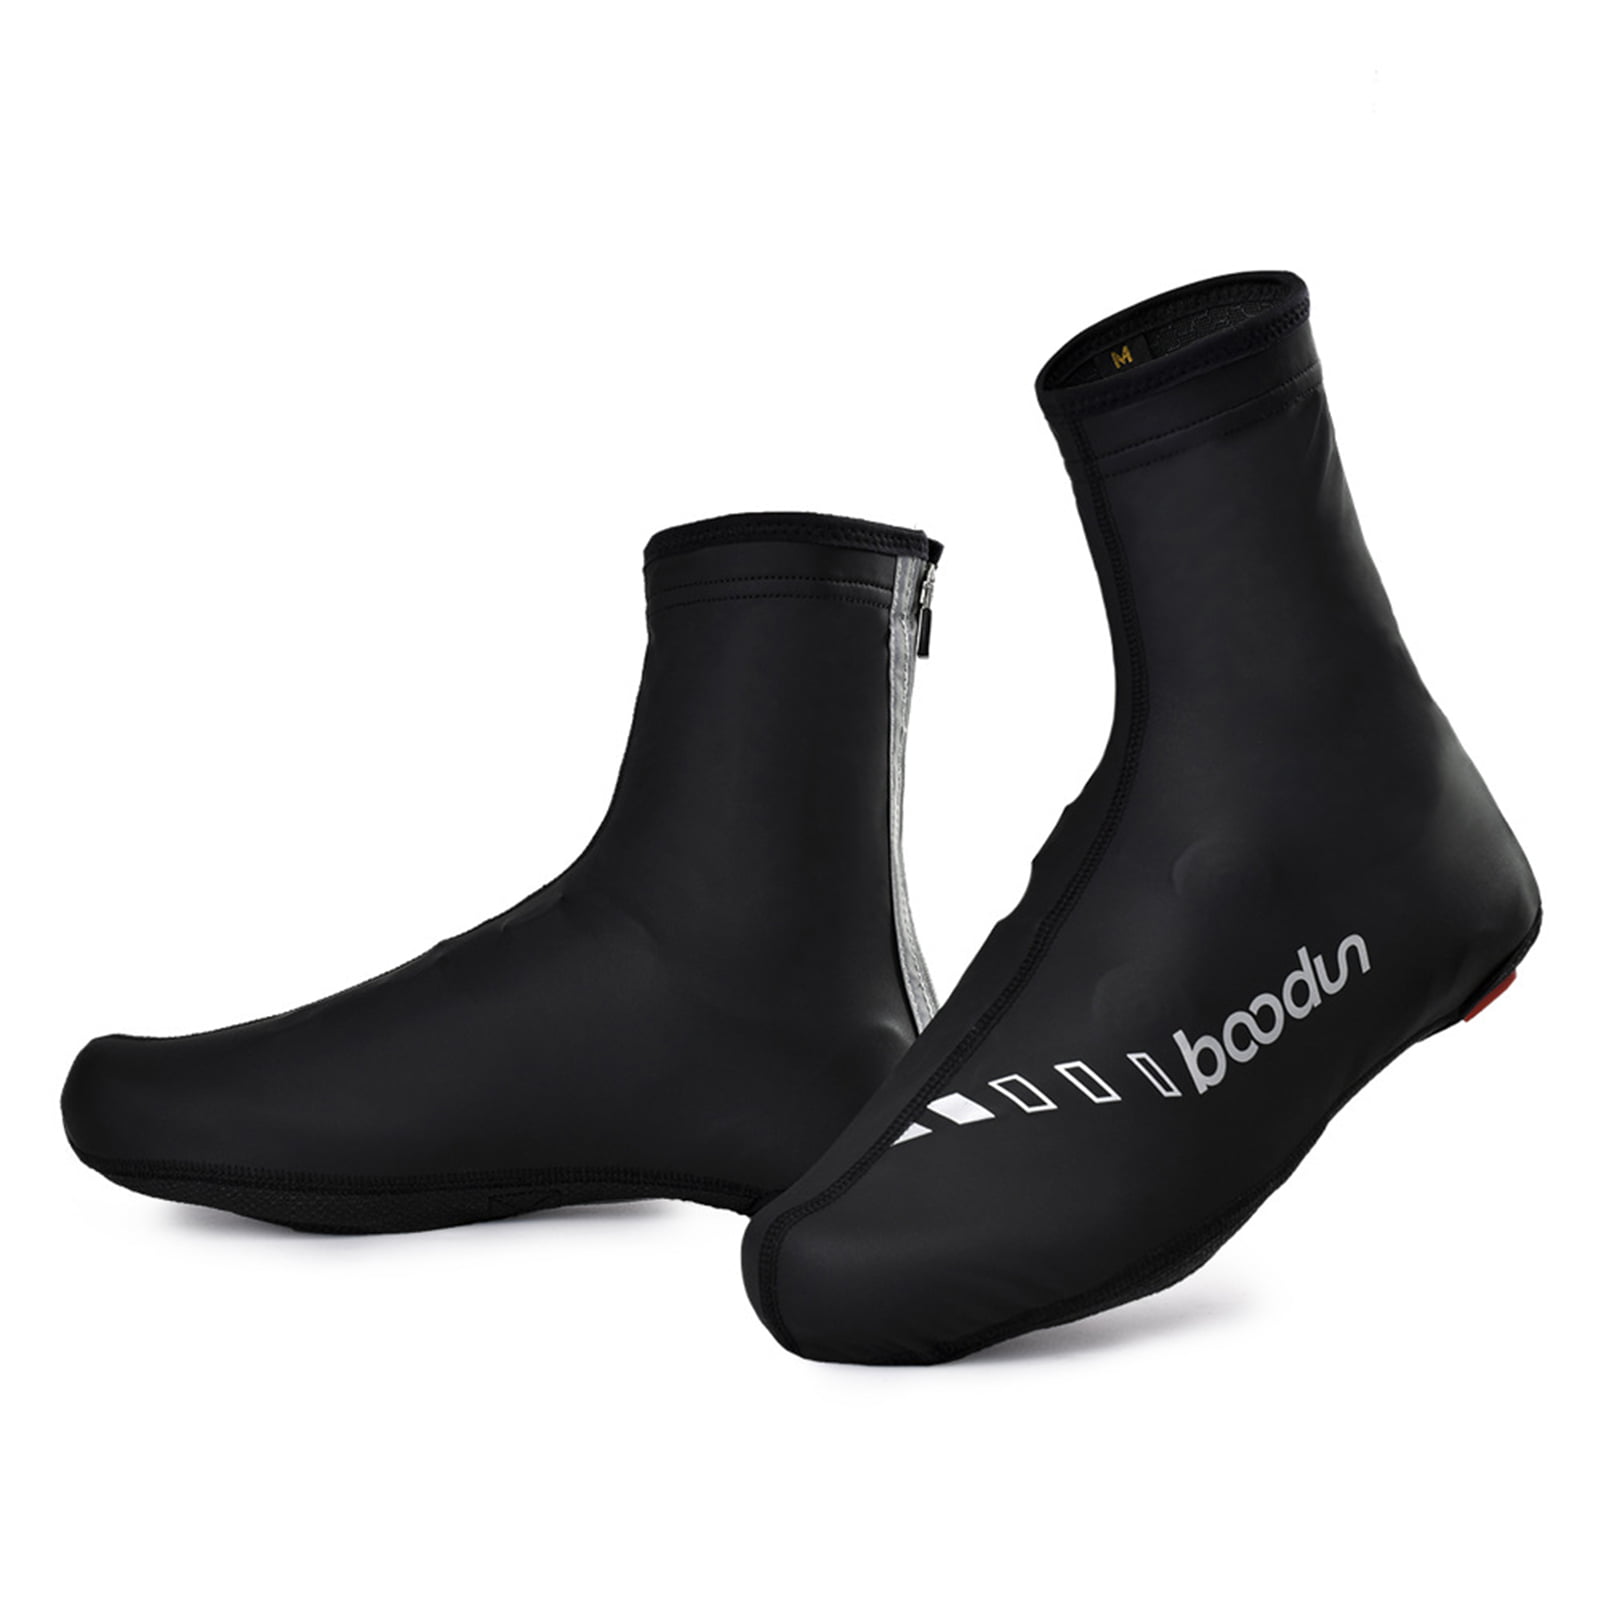 Waterproof Bike Shoe Covers Bicycle Shoes Protection Rain Feet Warmer Overshoes